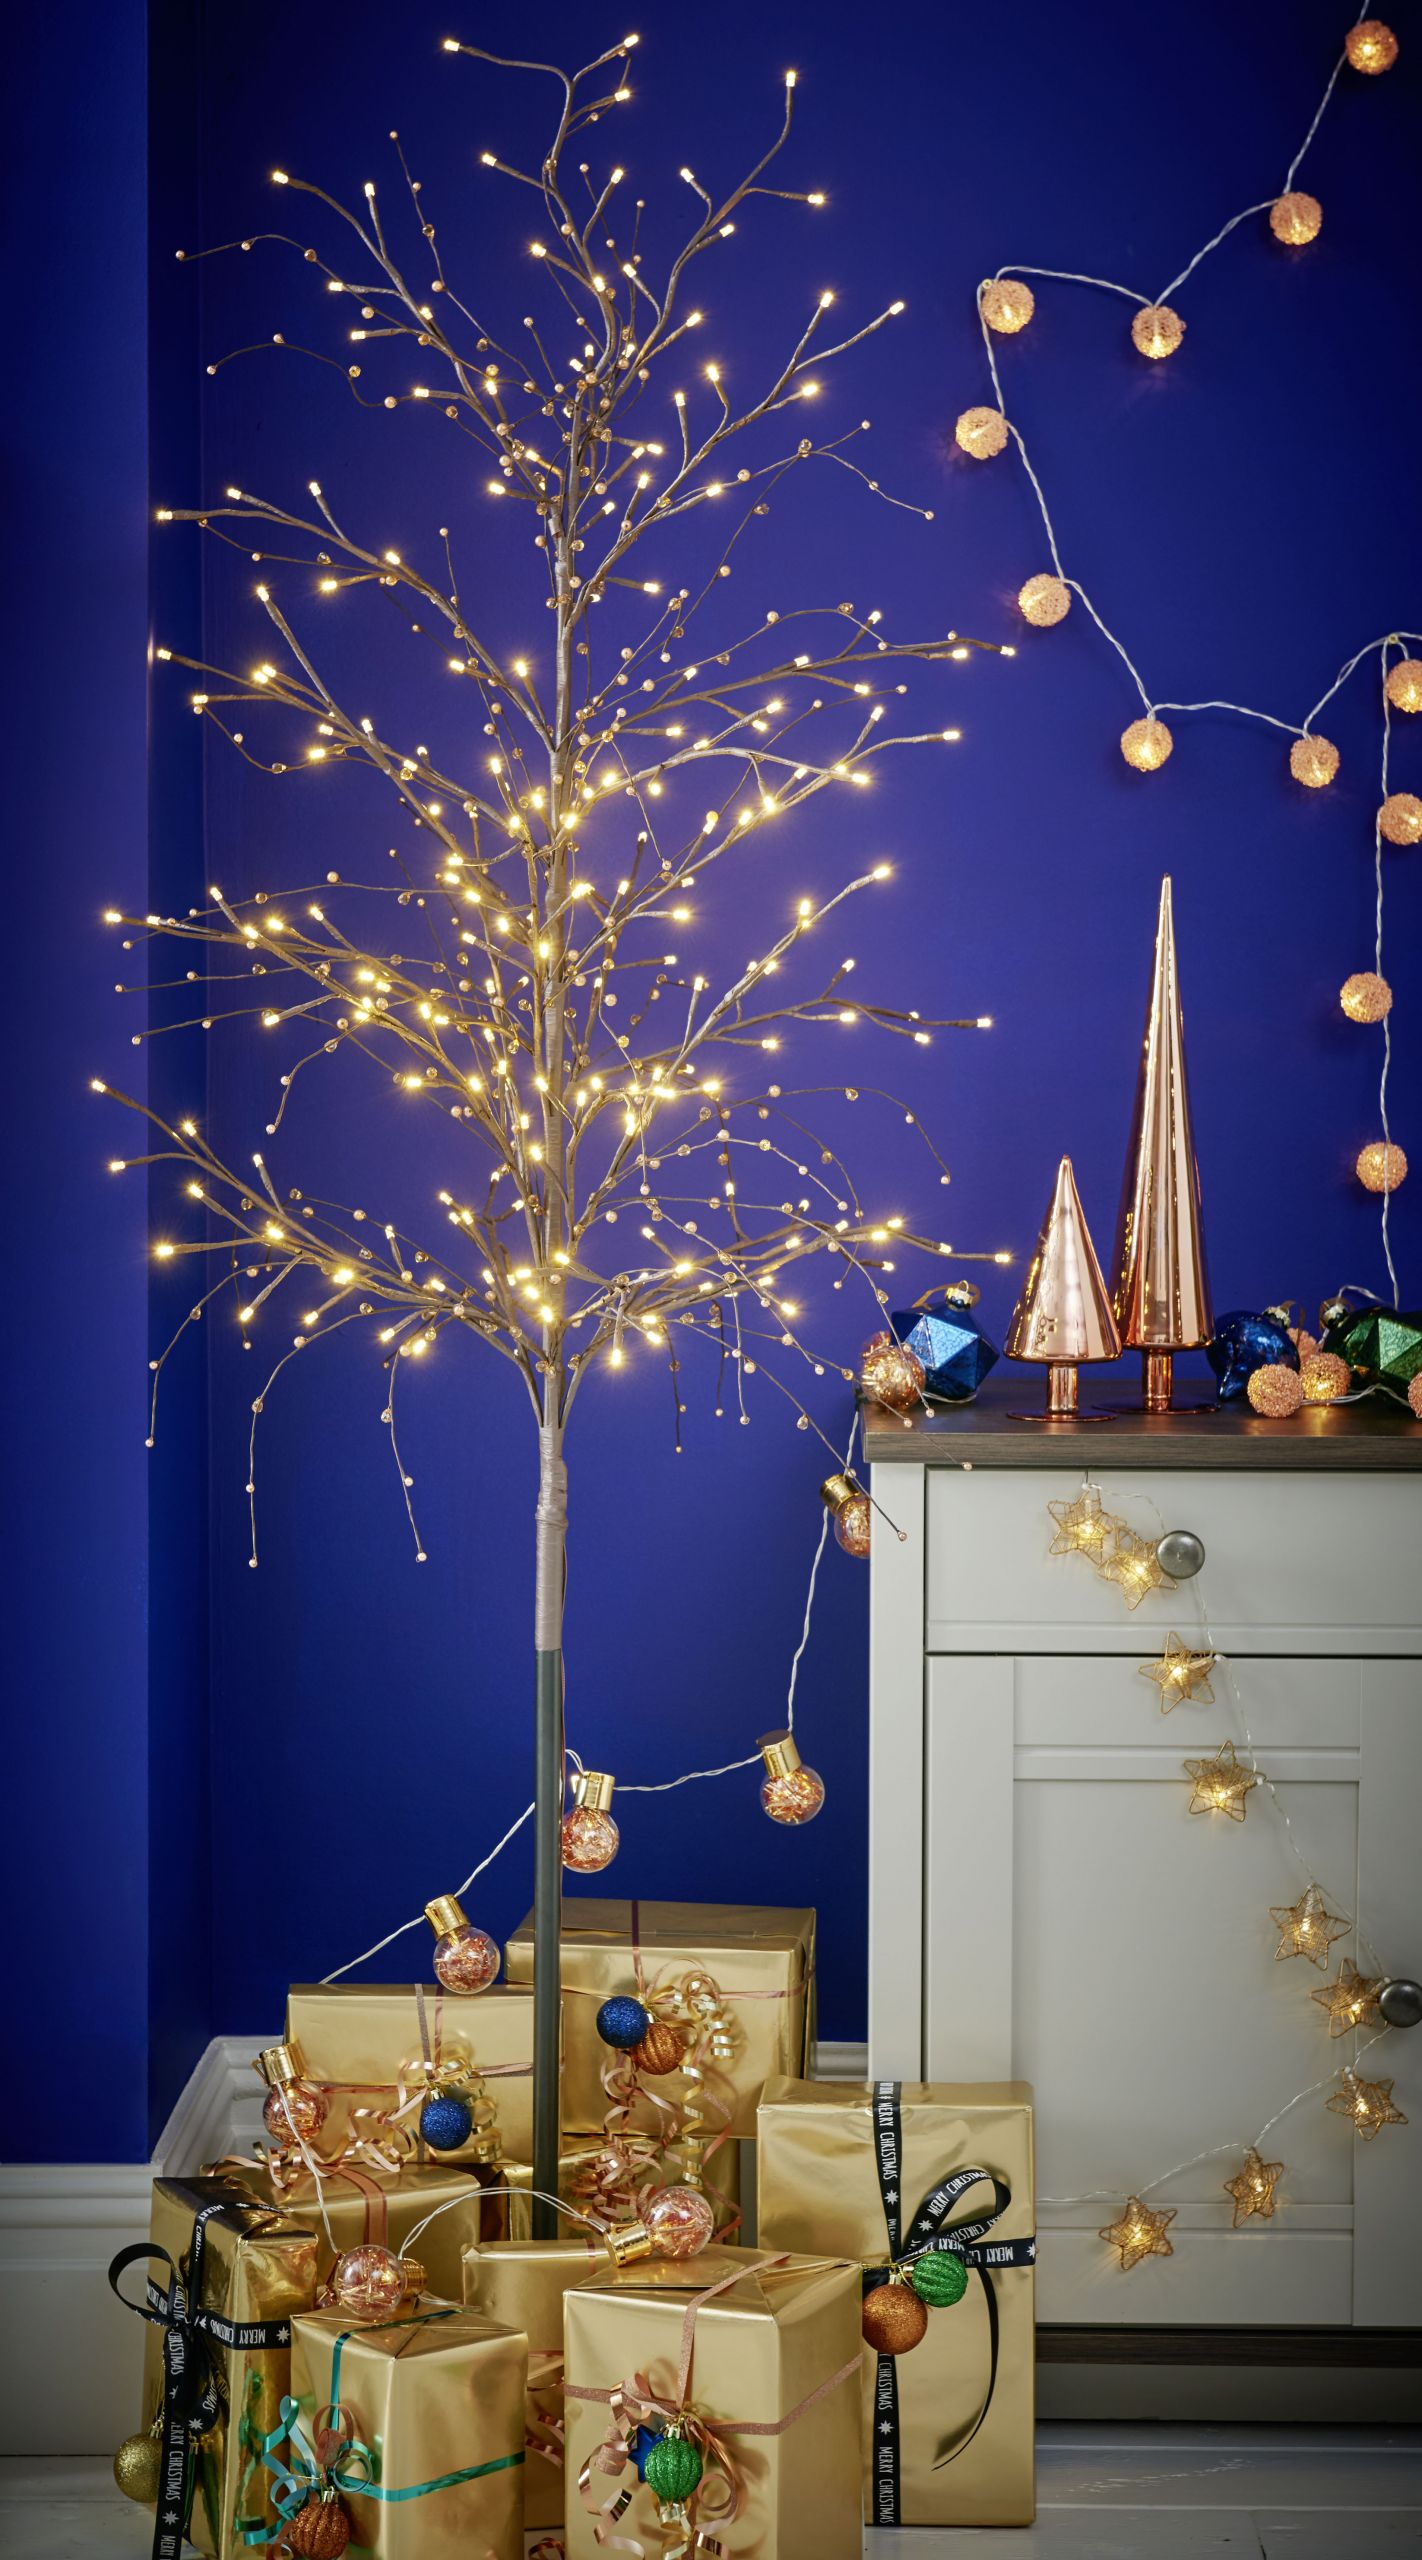 Christmas Indoor Light
 How To Choose The Best Indoor Christmas Lights